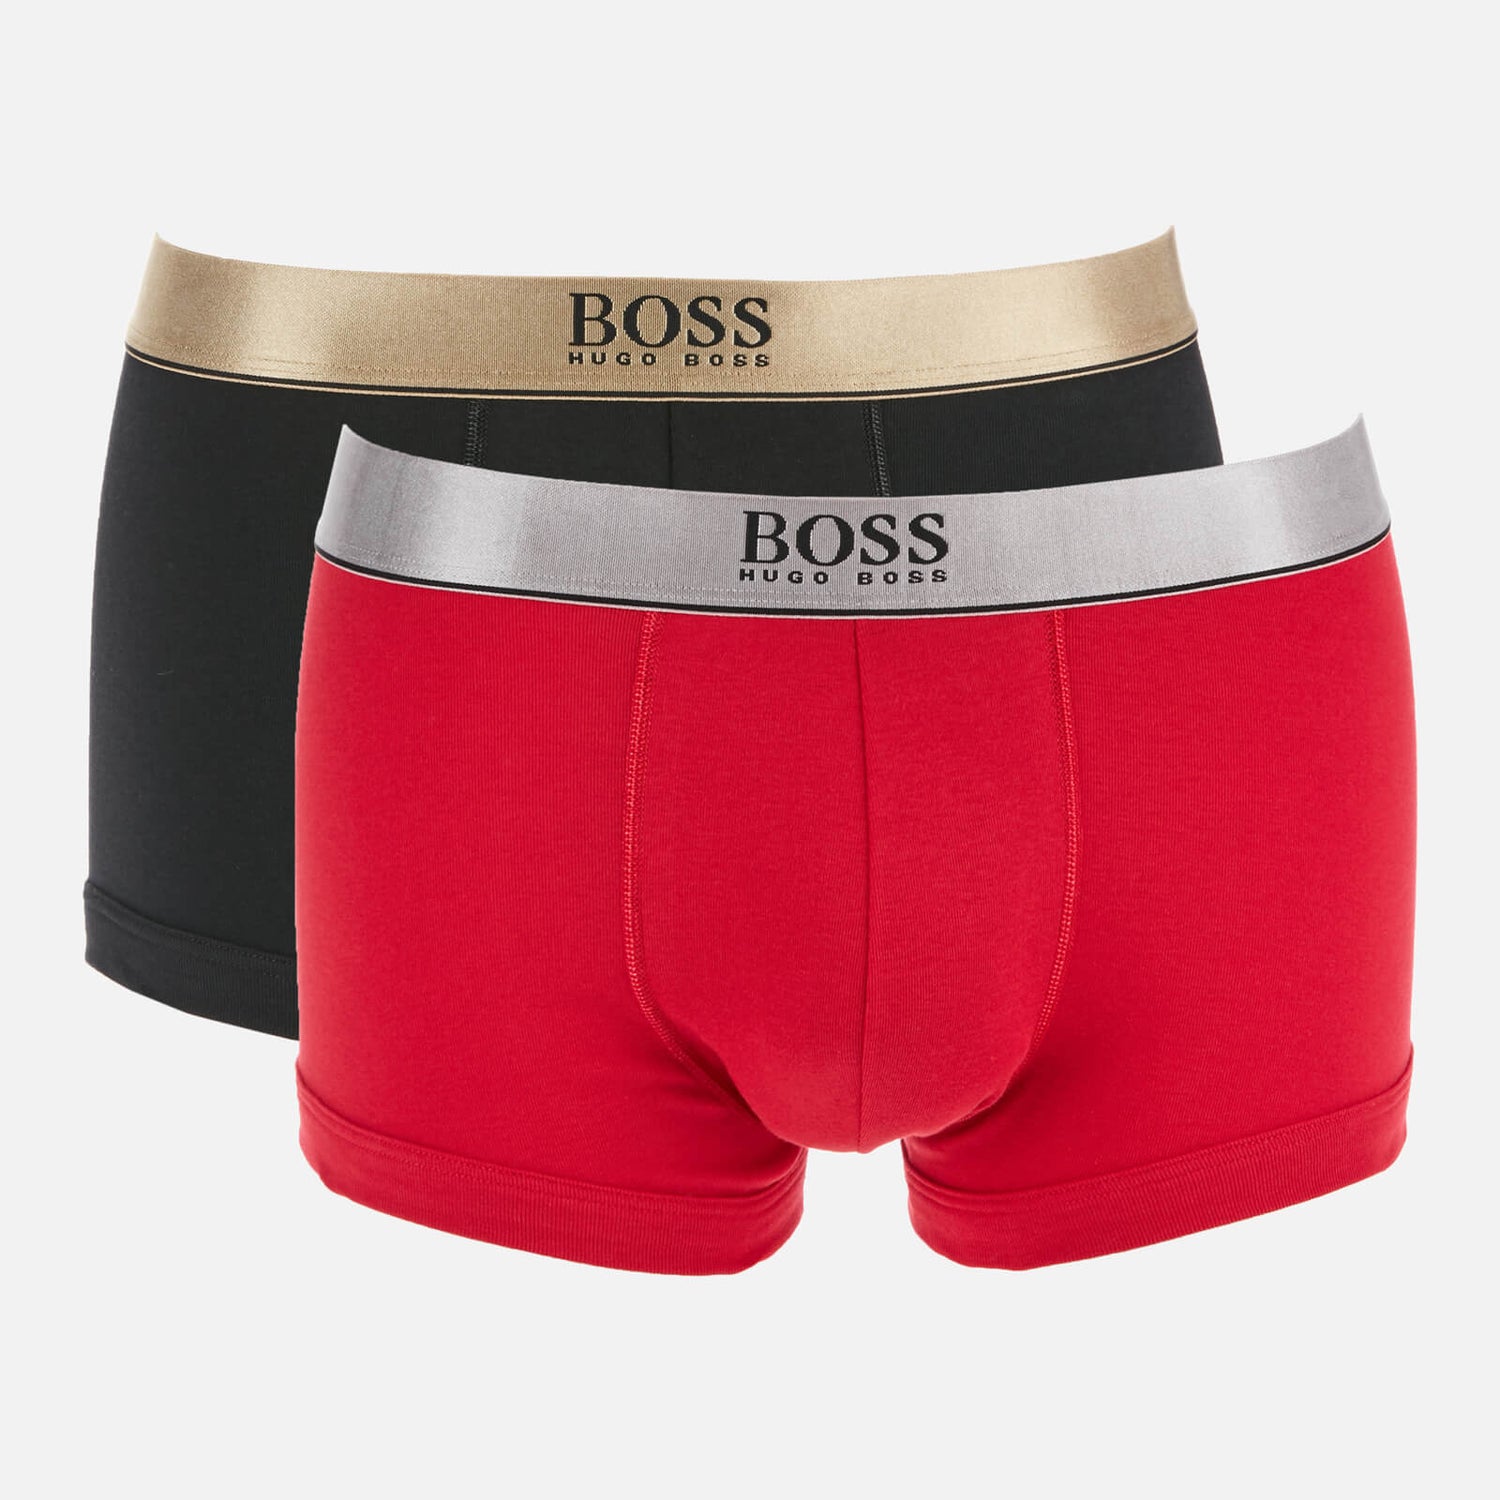 BOSS Hugo Boss Men's Twin Gift Pack Boxers - Black/Red | TheHut.com